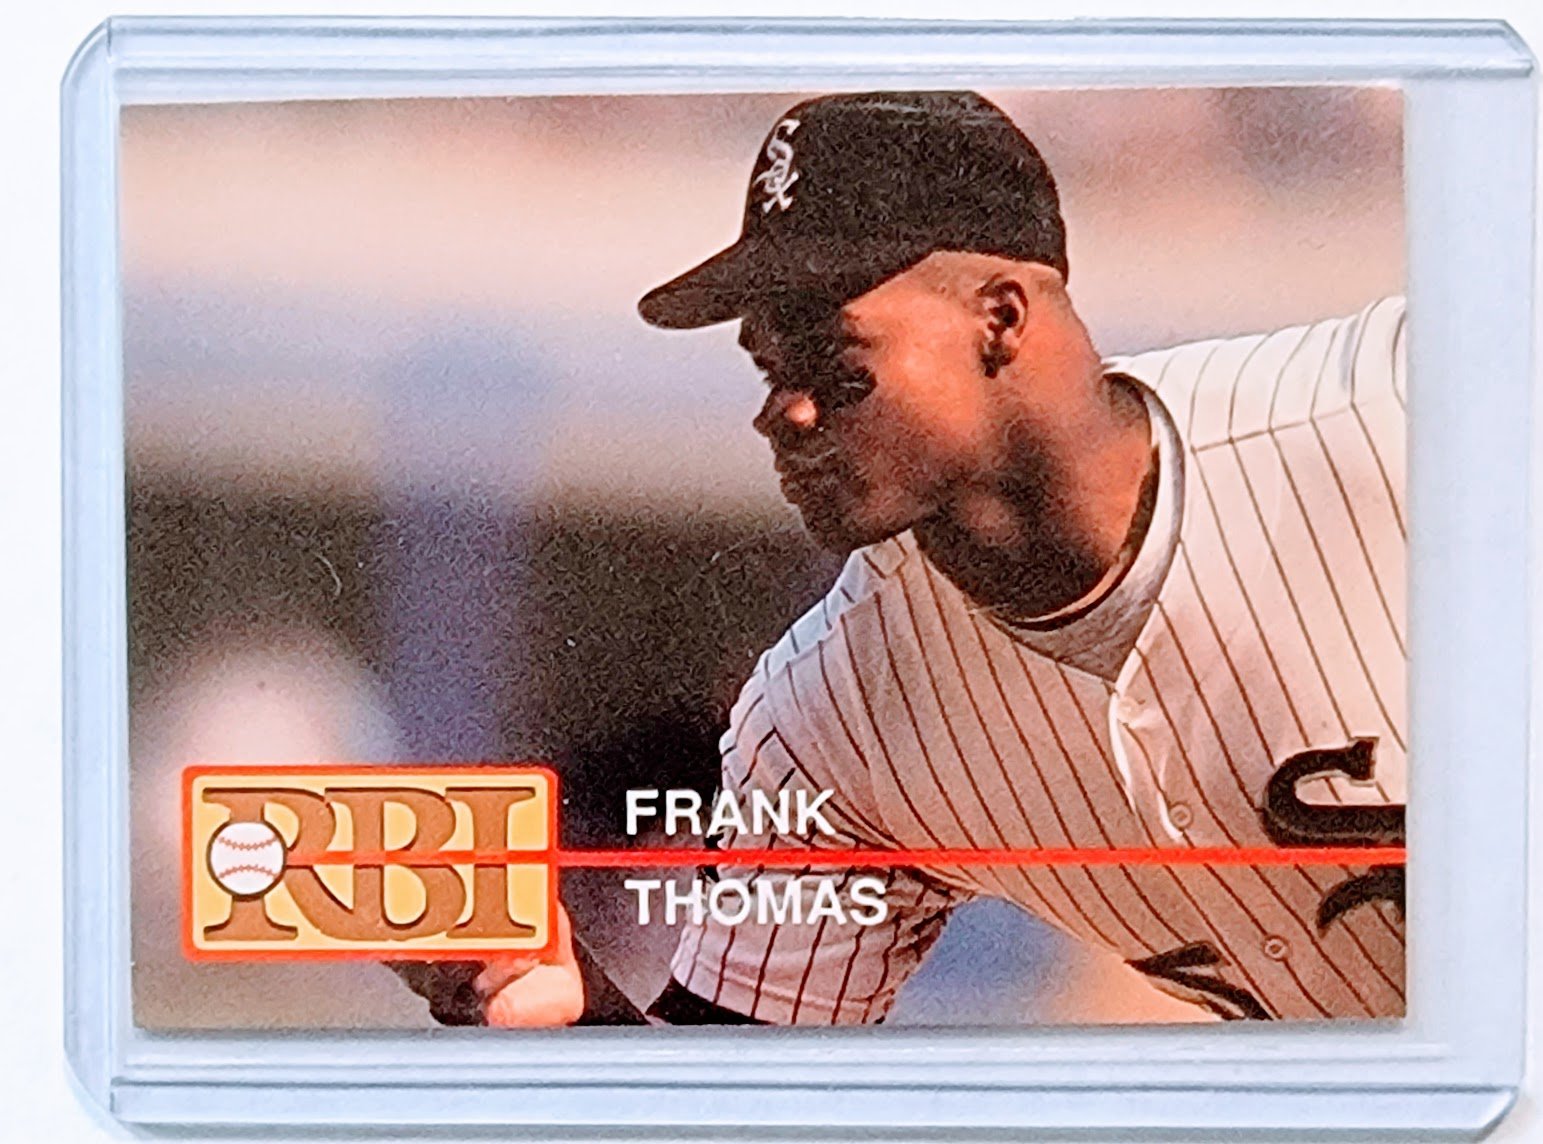 1993 Frank Thomas RBI Promo Card TPTV simple Xclusive Collectibles   